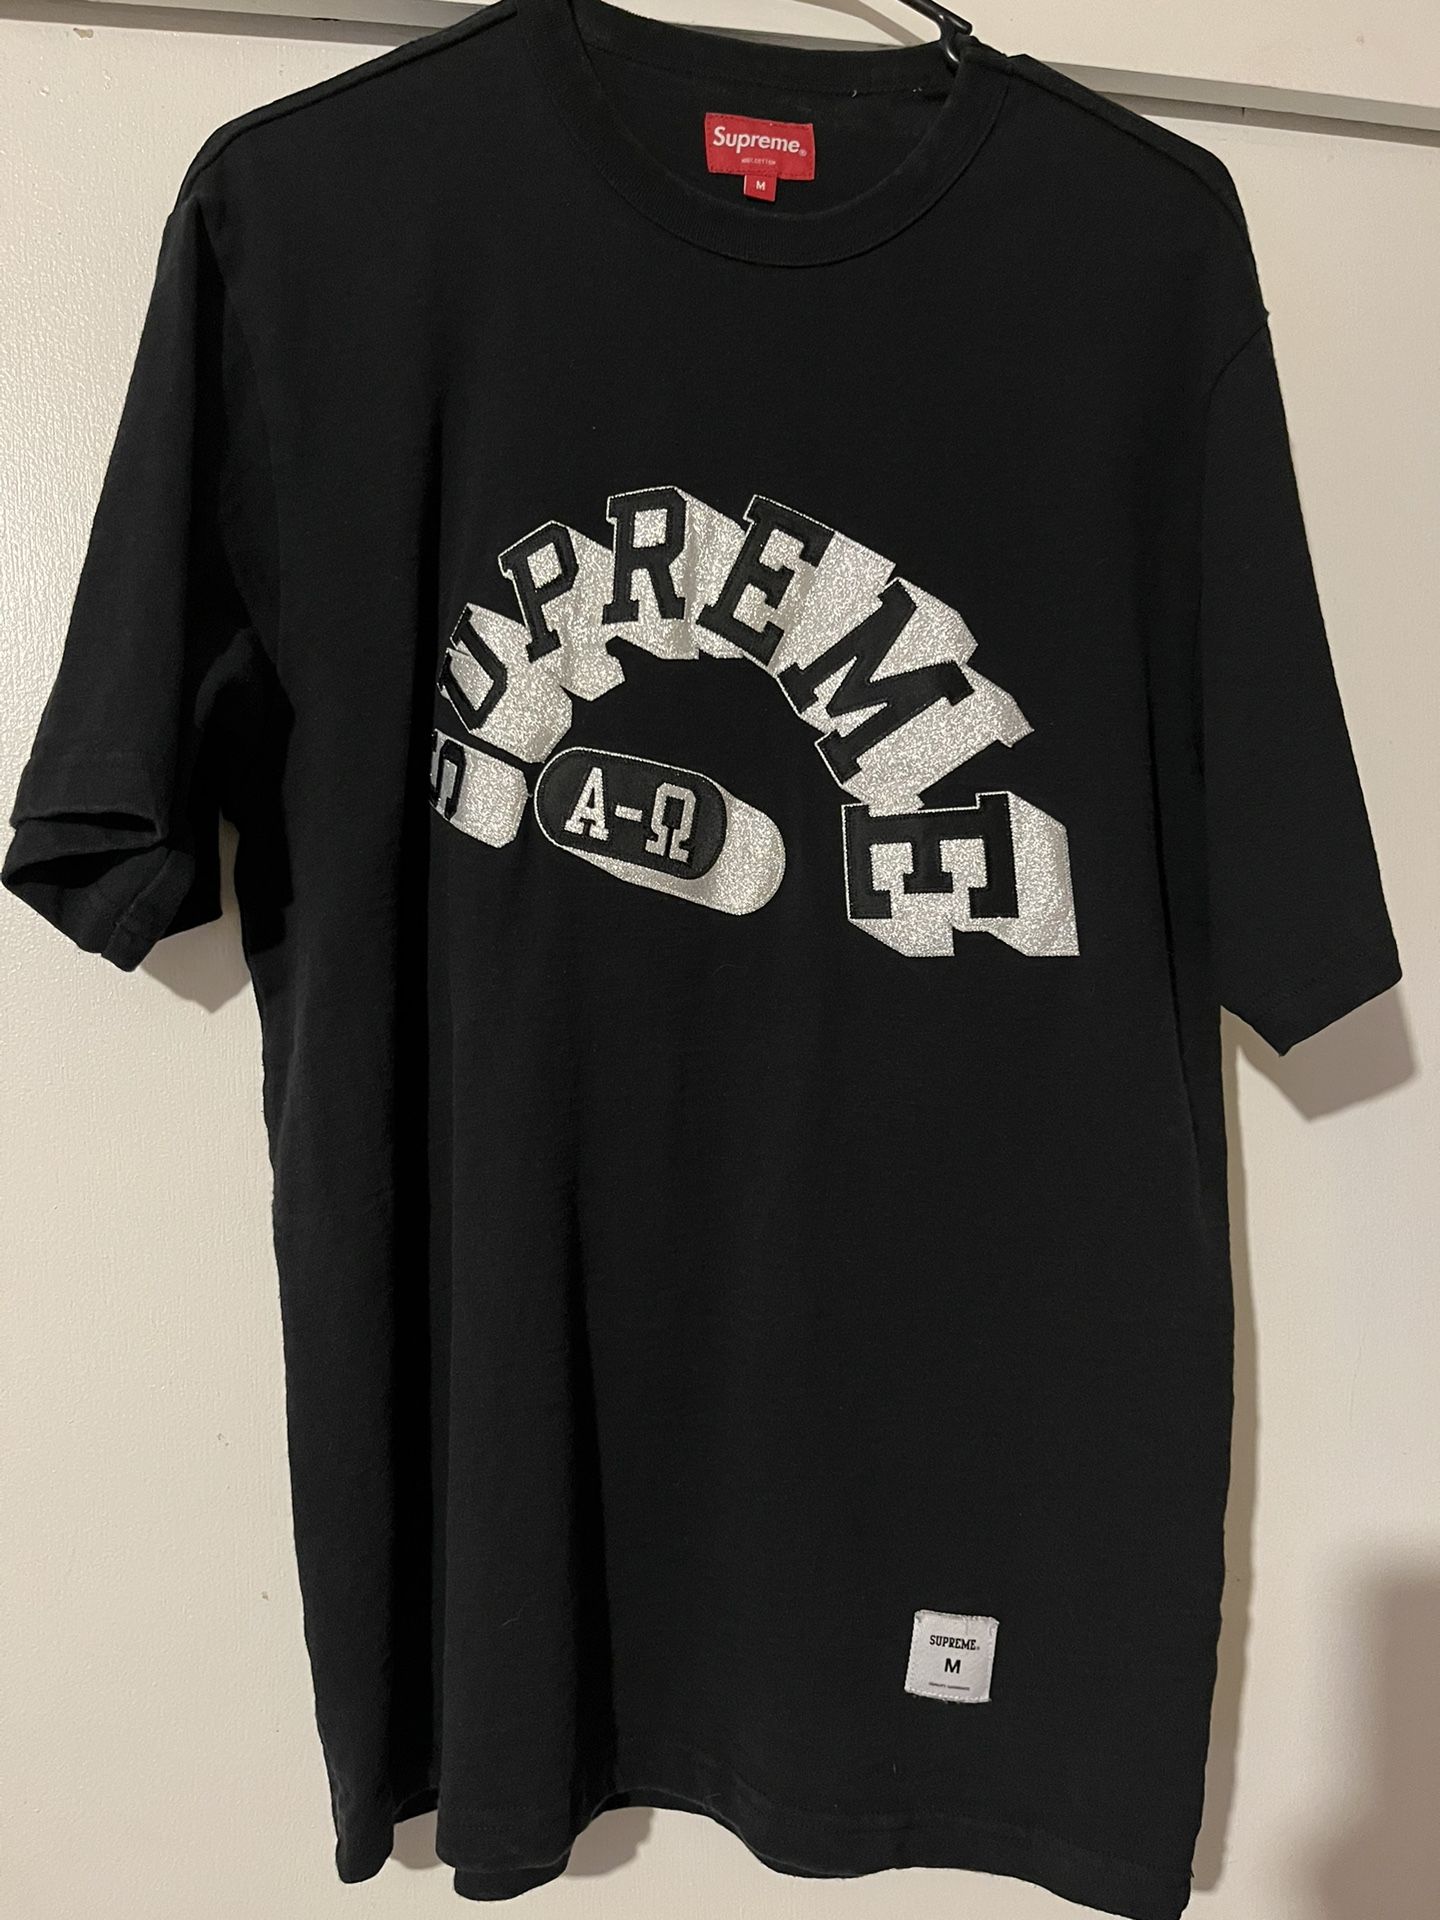 Supreme Black T Shirt 